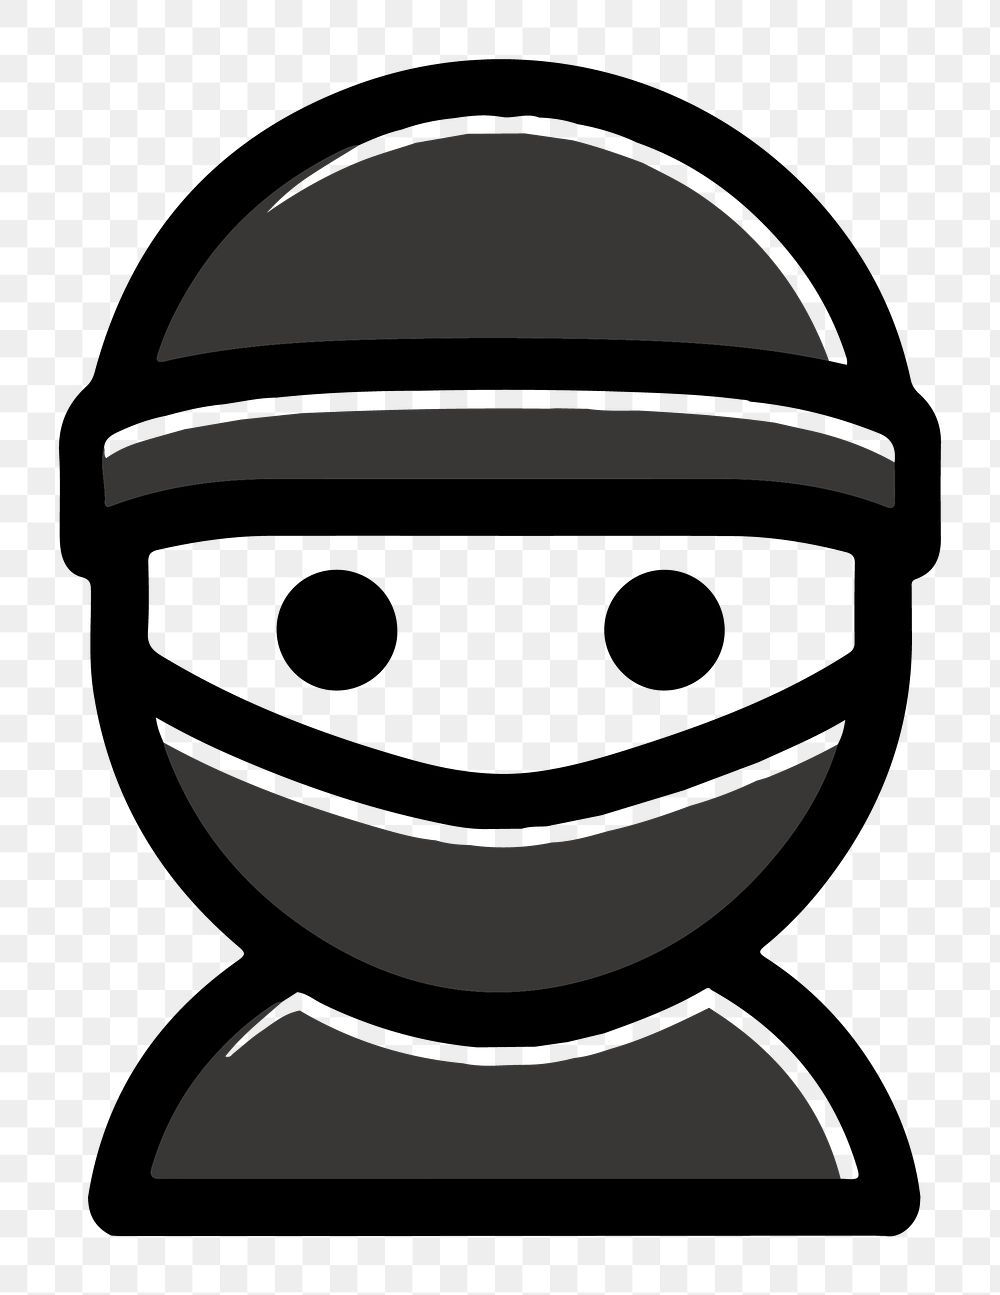 Ninja png character line art, transparent background